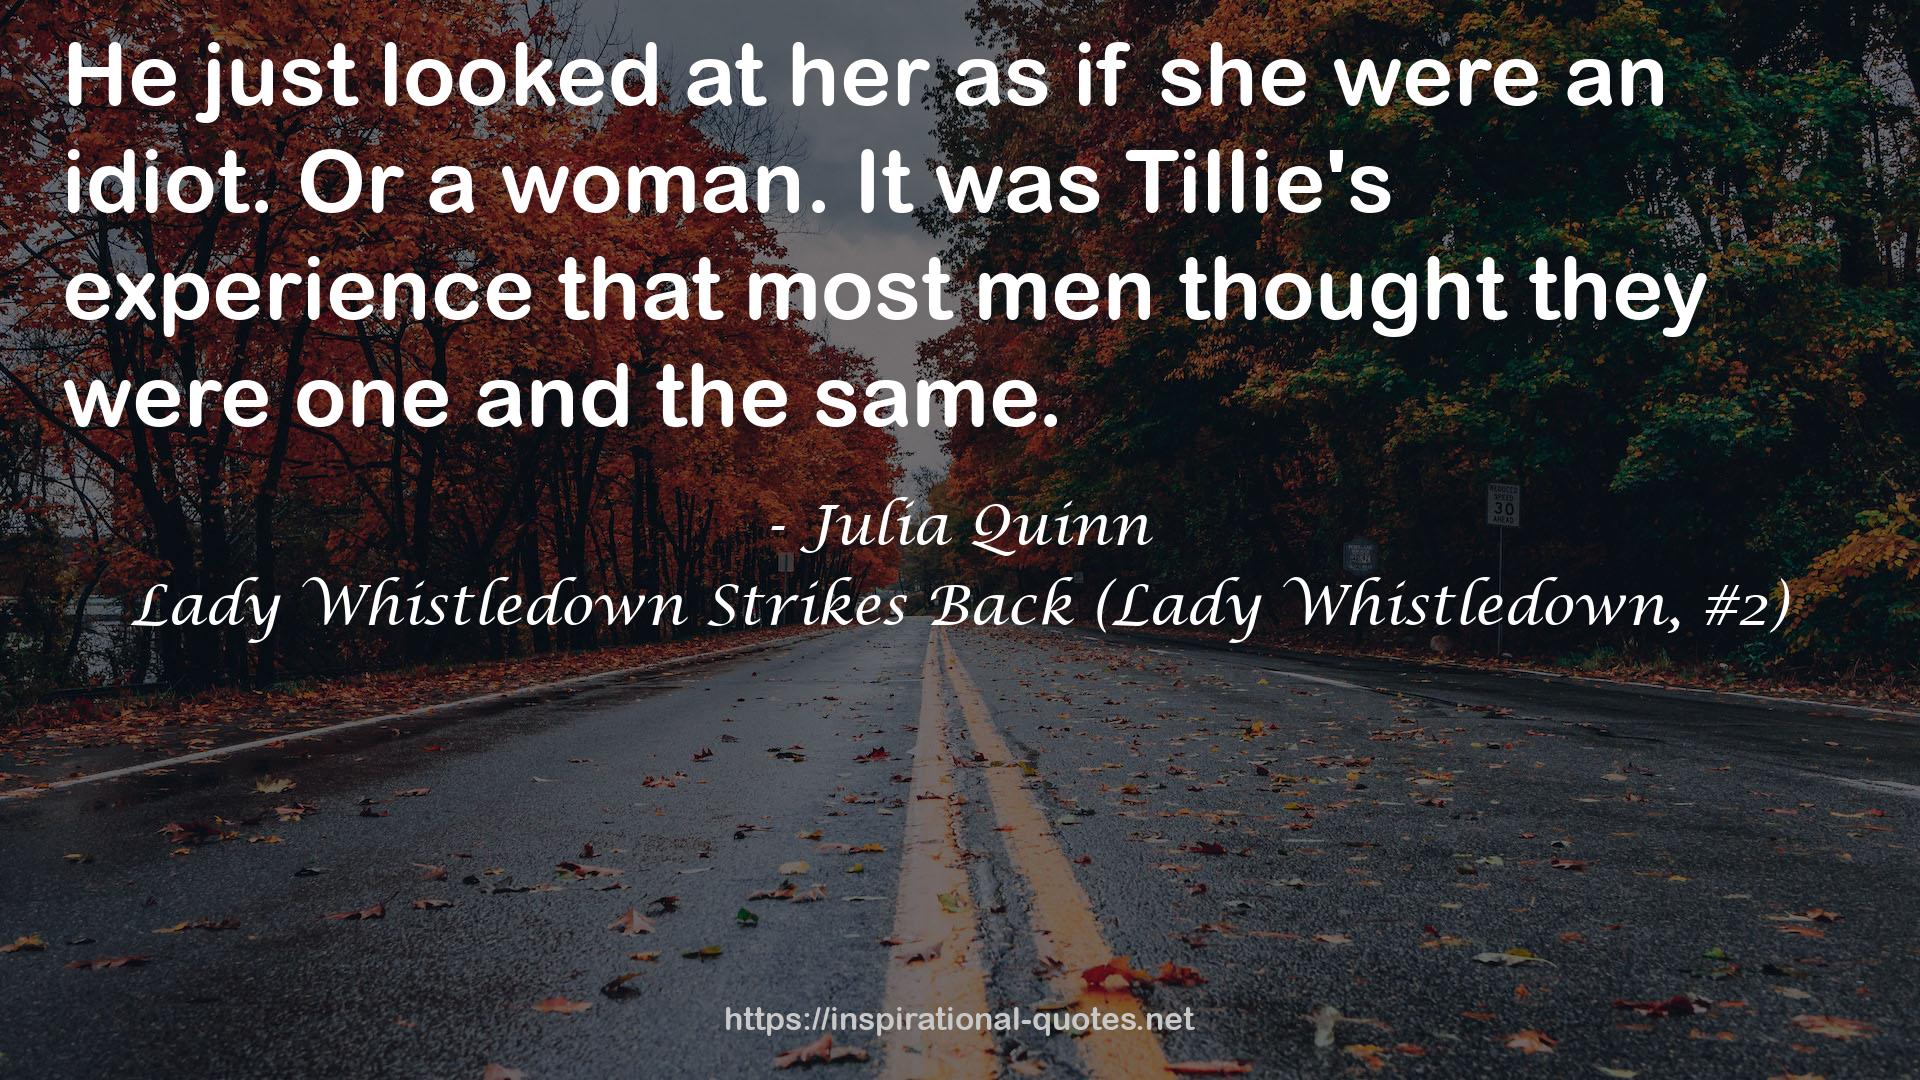 Lady Whistledown Strikes Back (Lady Whistledown, #2) QUOTES